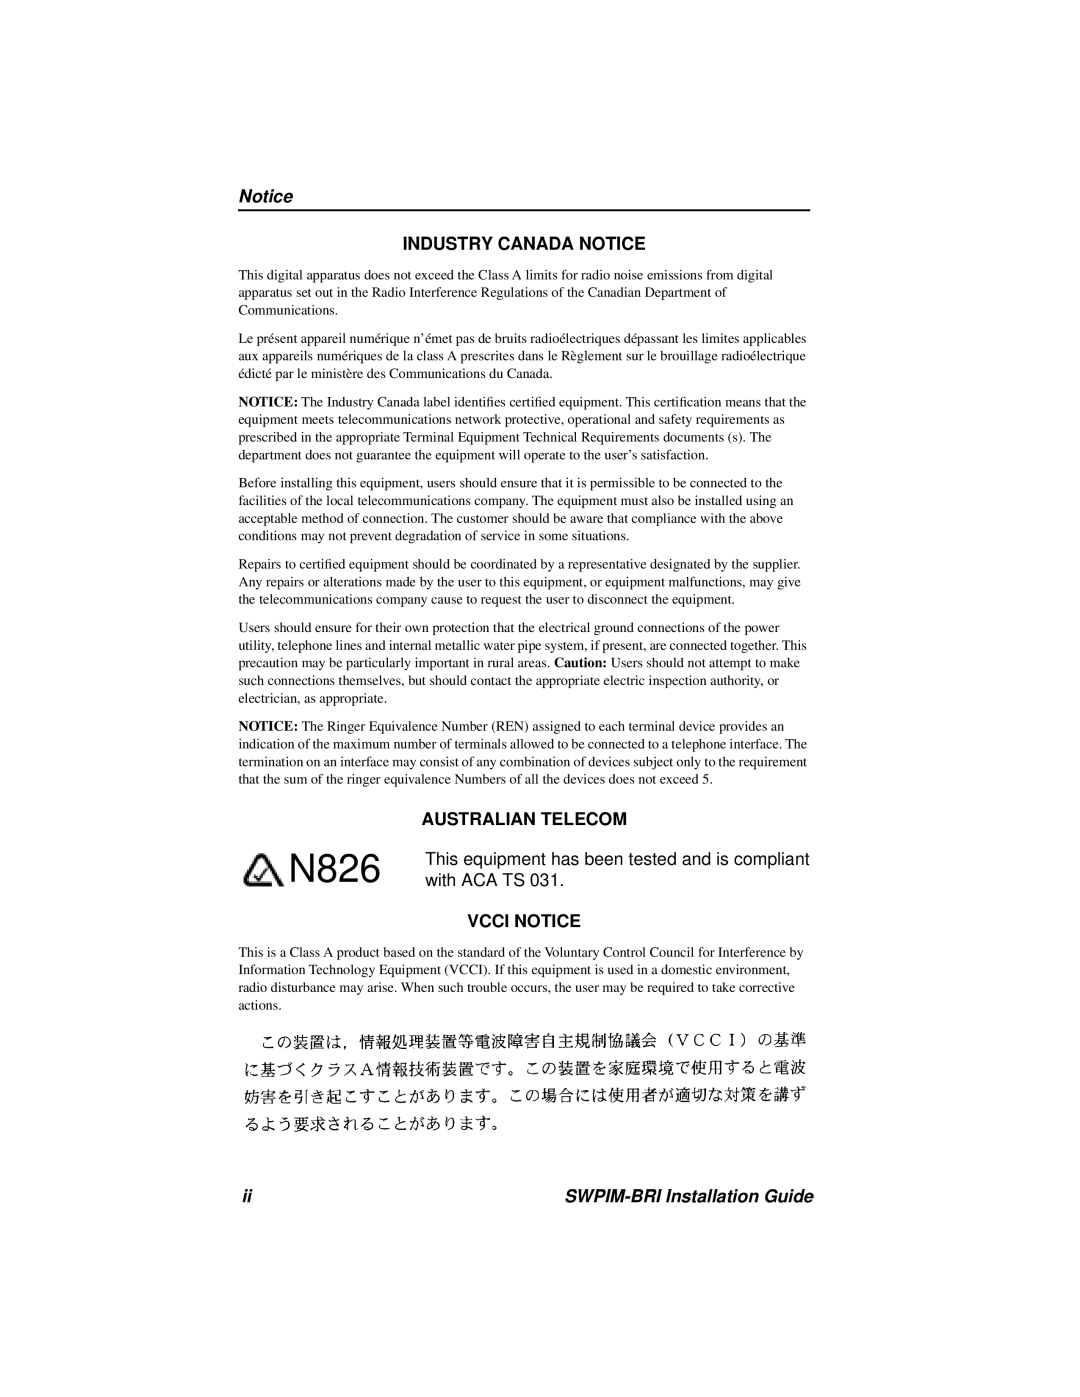 Cabletron Systems manual N826, Industry Canada Notice, Australian Telecom, Vcci Notice, SWPIM-BRI Installation Guide 